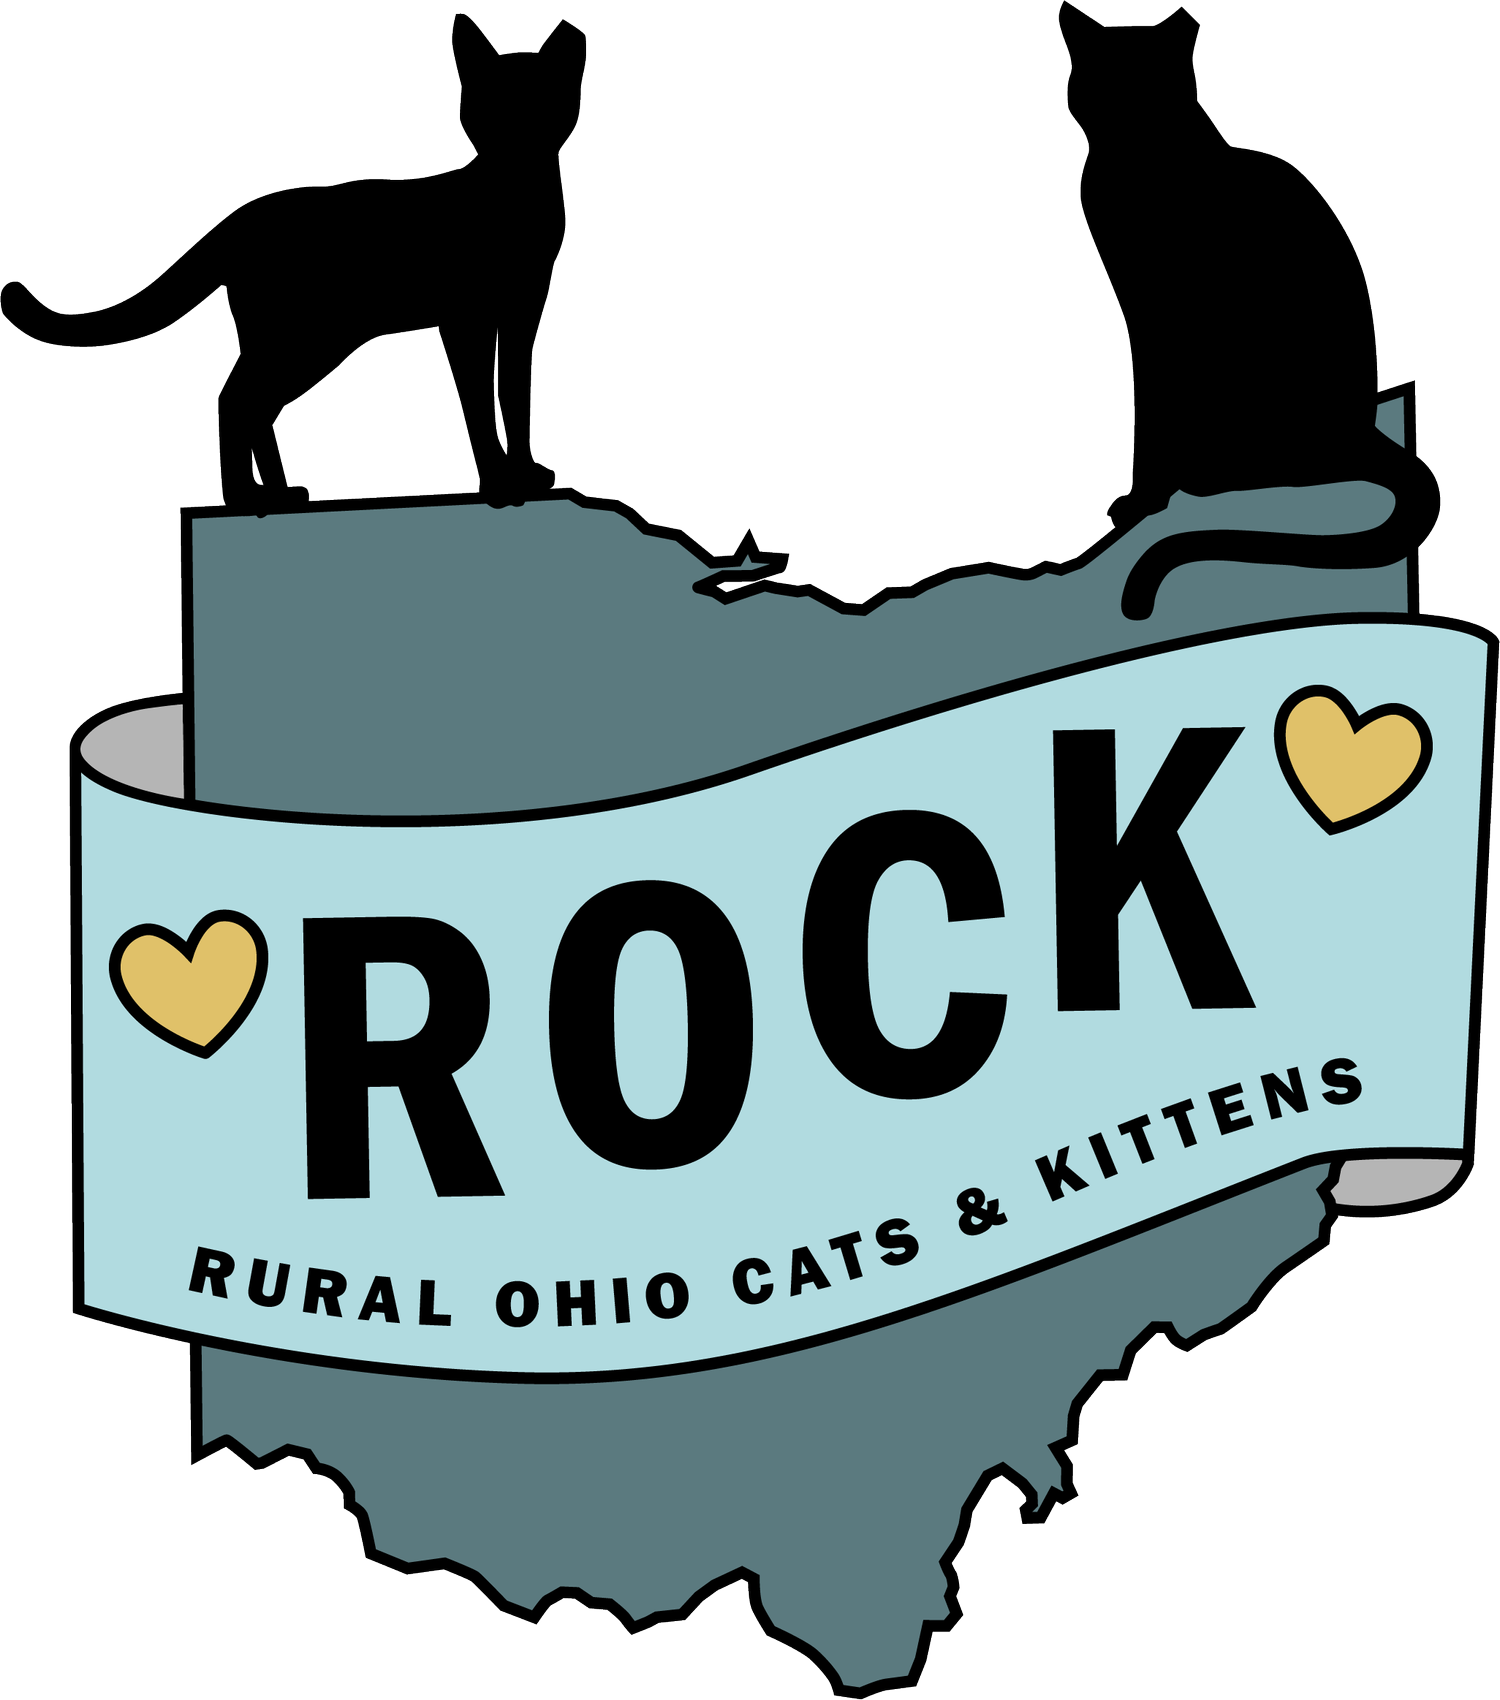 Rural Ohio Cats &amp; Kittens